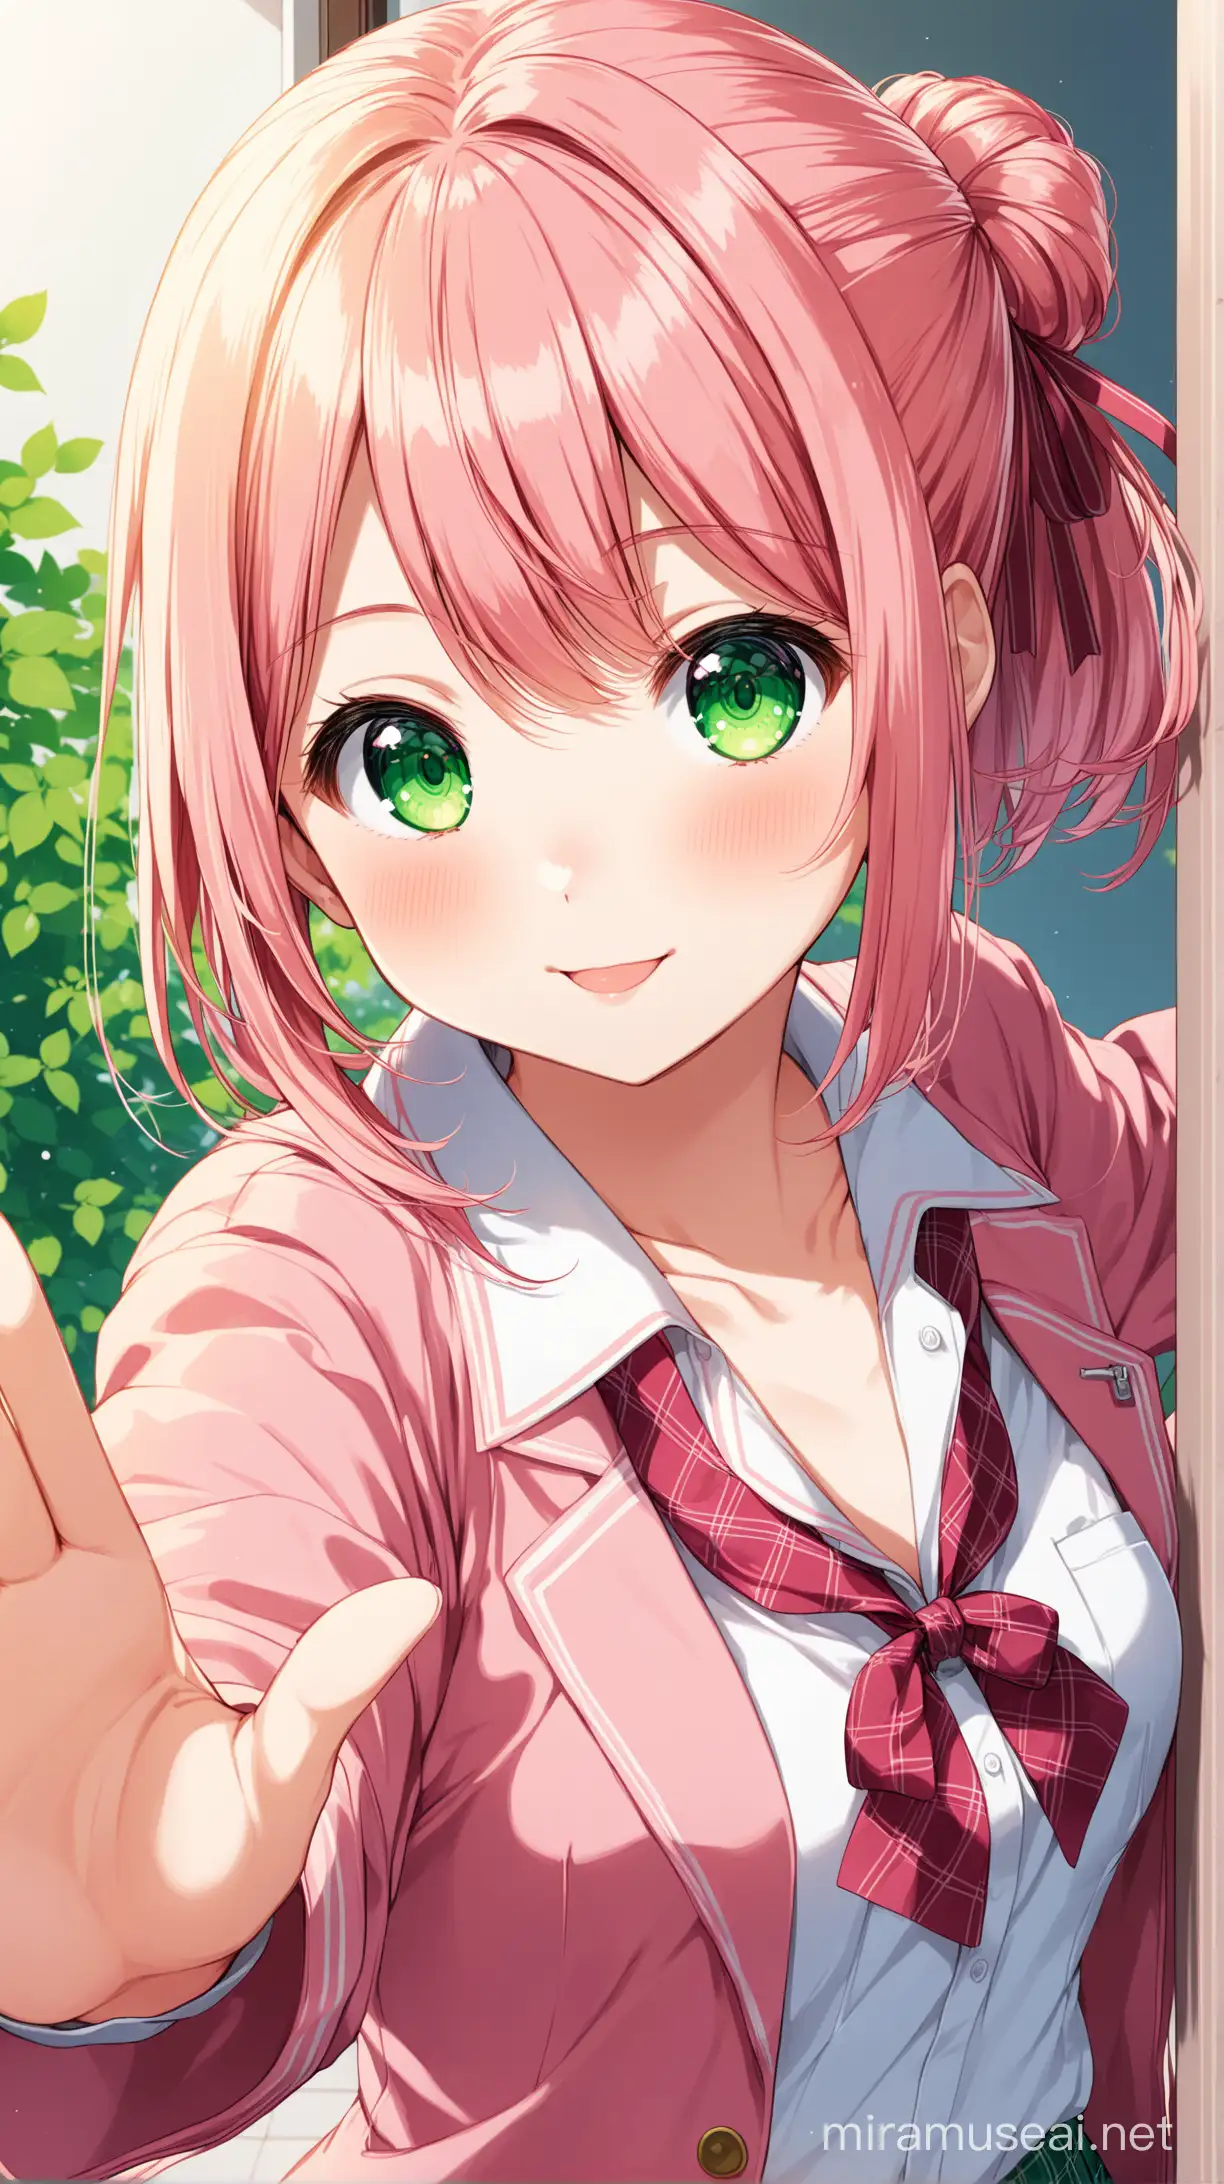 Cheerful Anime Schoolgirl Greeting in Morning